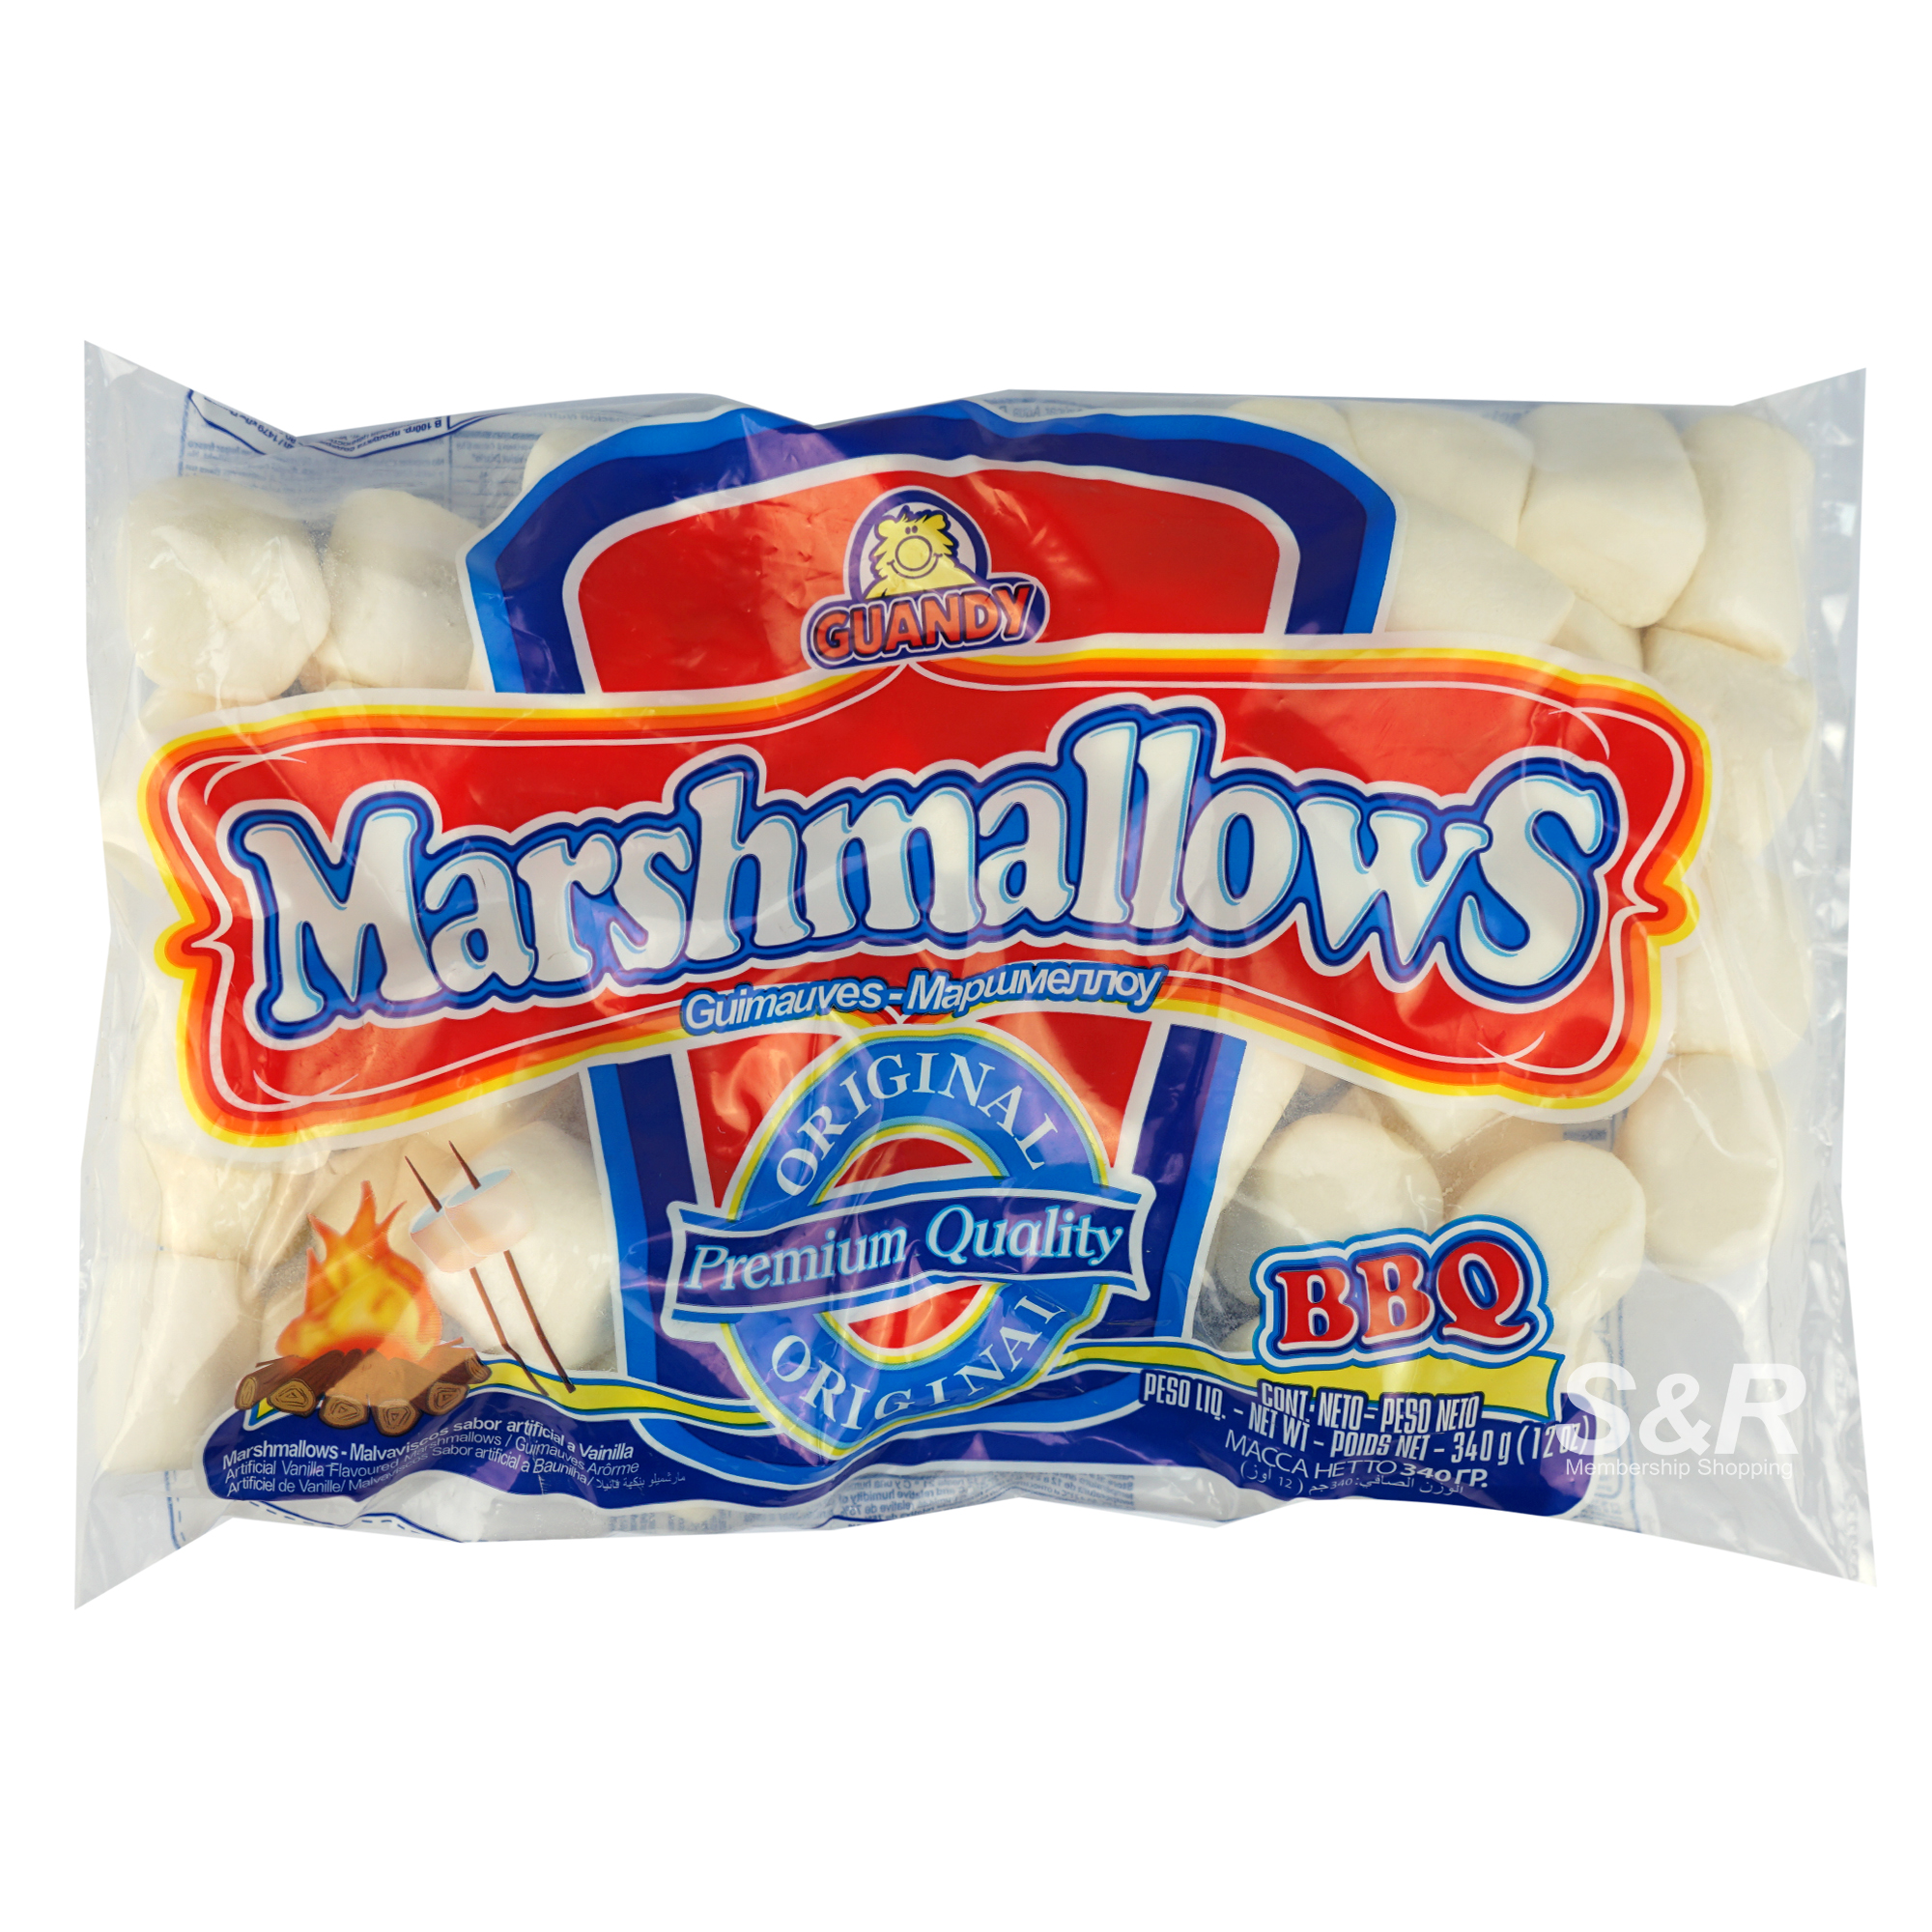 Guandy Marshmallow Original Premium Quality 340g